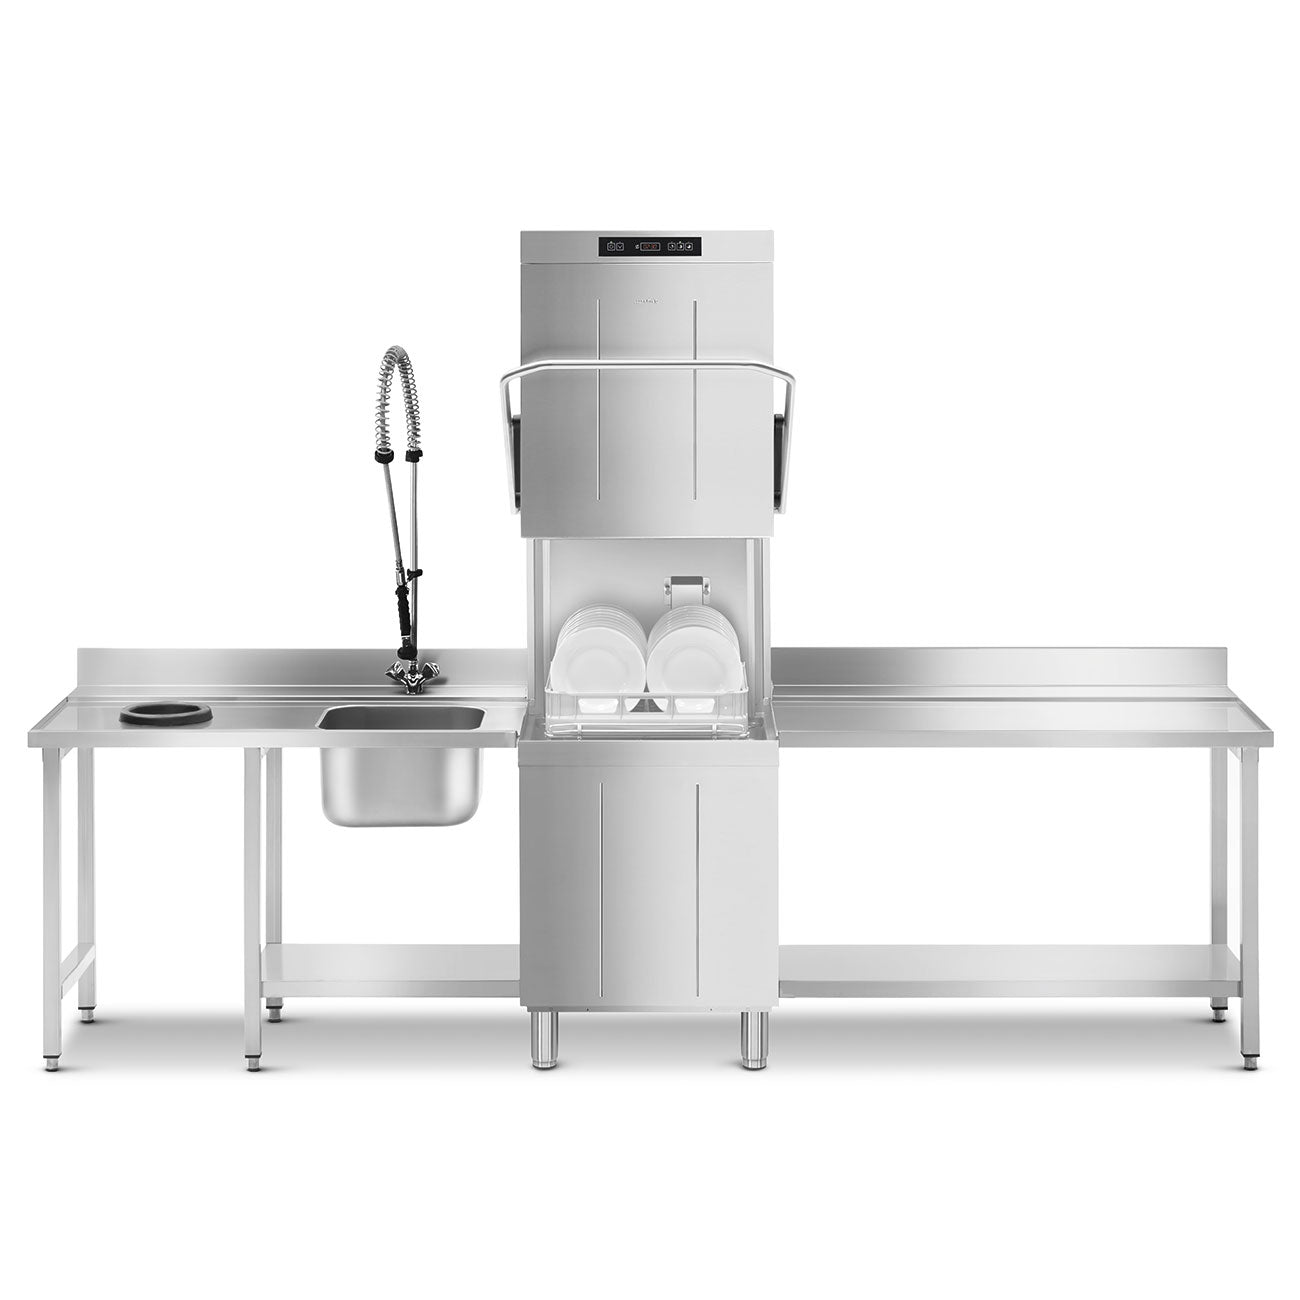 Smeg Ecoline range Hood Type Dishwasher with integral softener 500x500 SPH505S